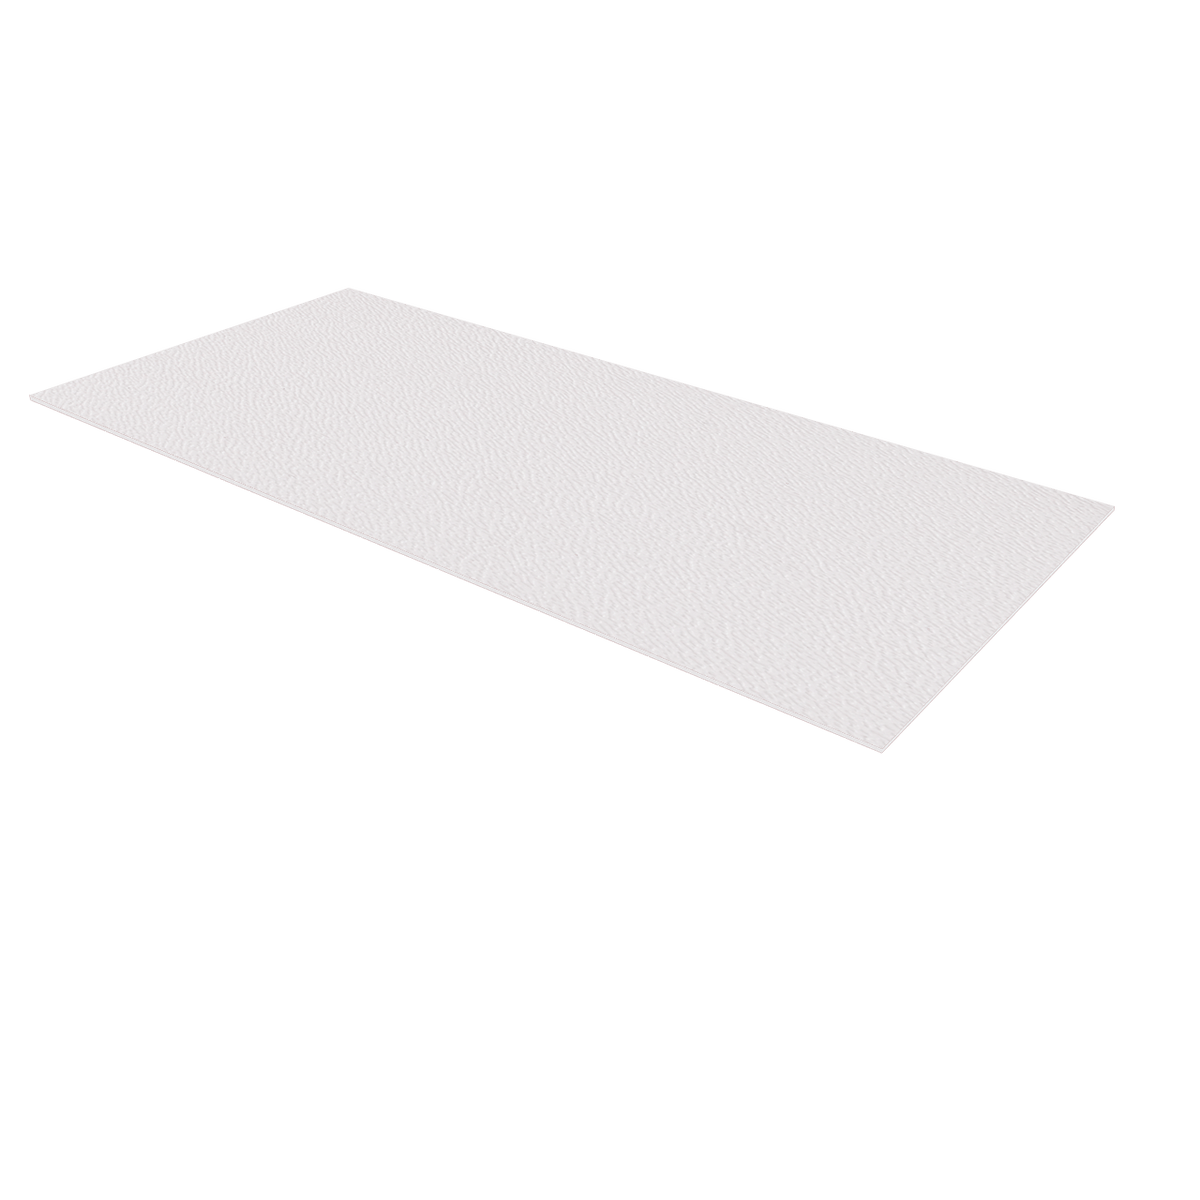 ABS Plastic Sheet - White